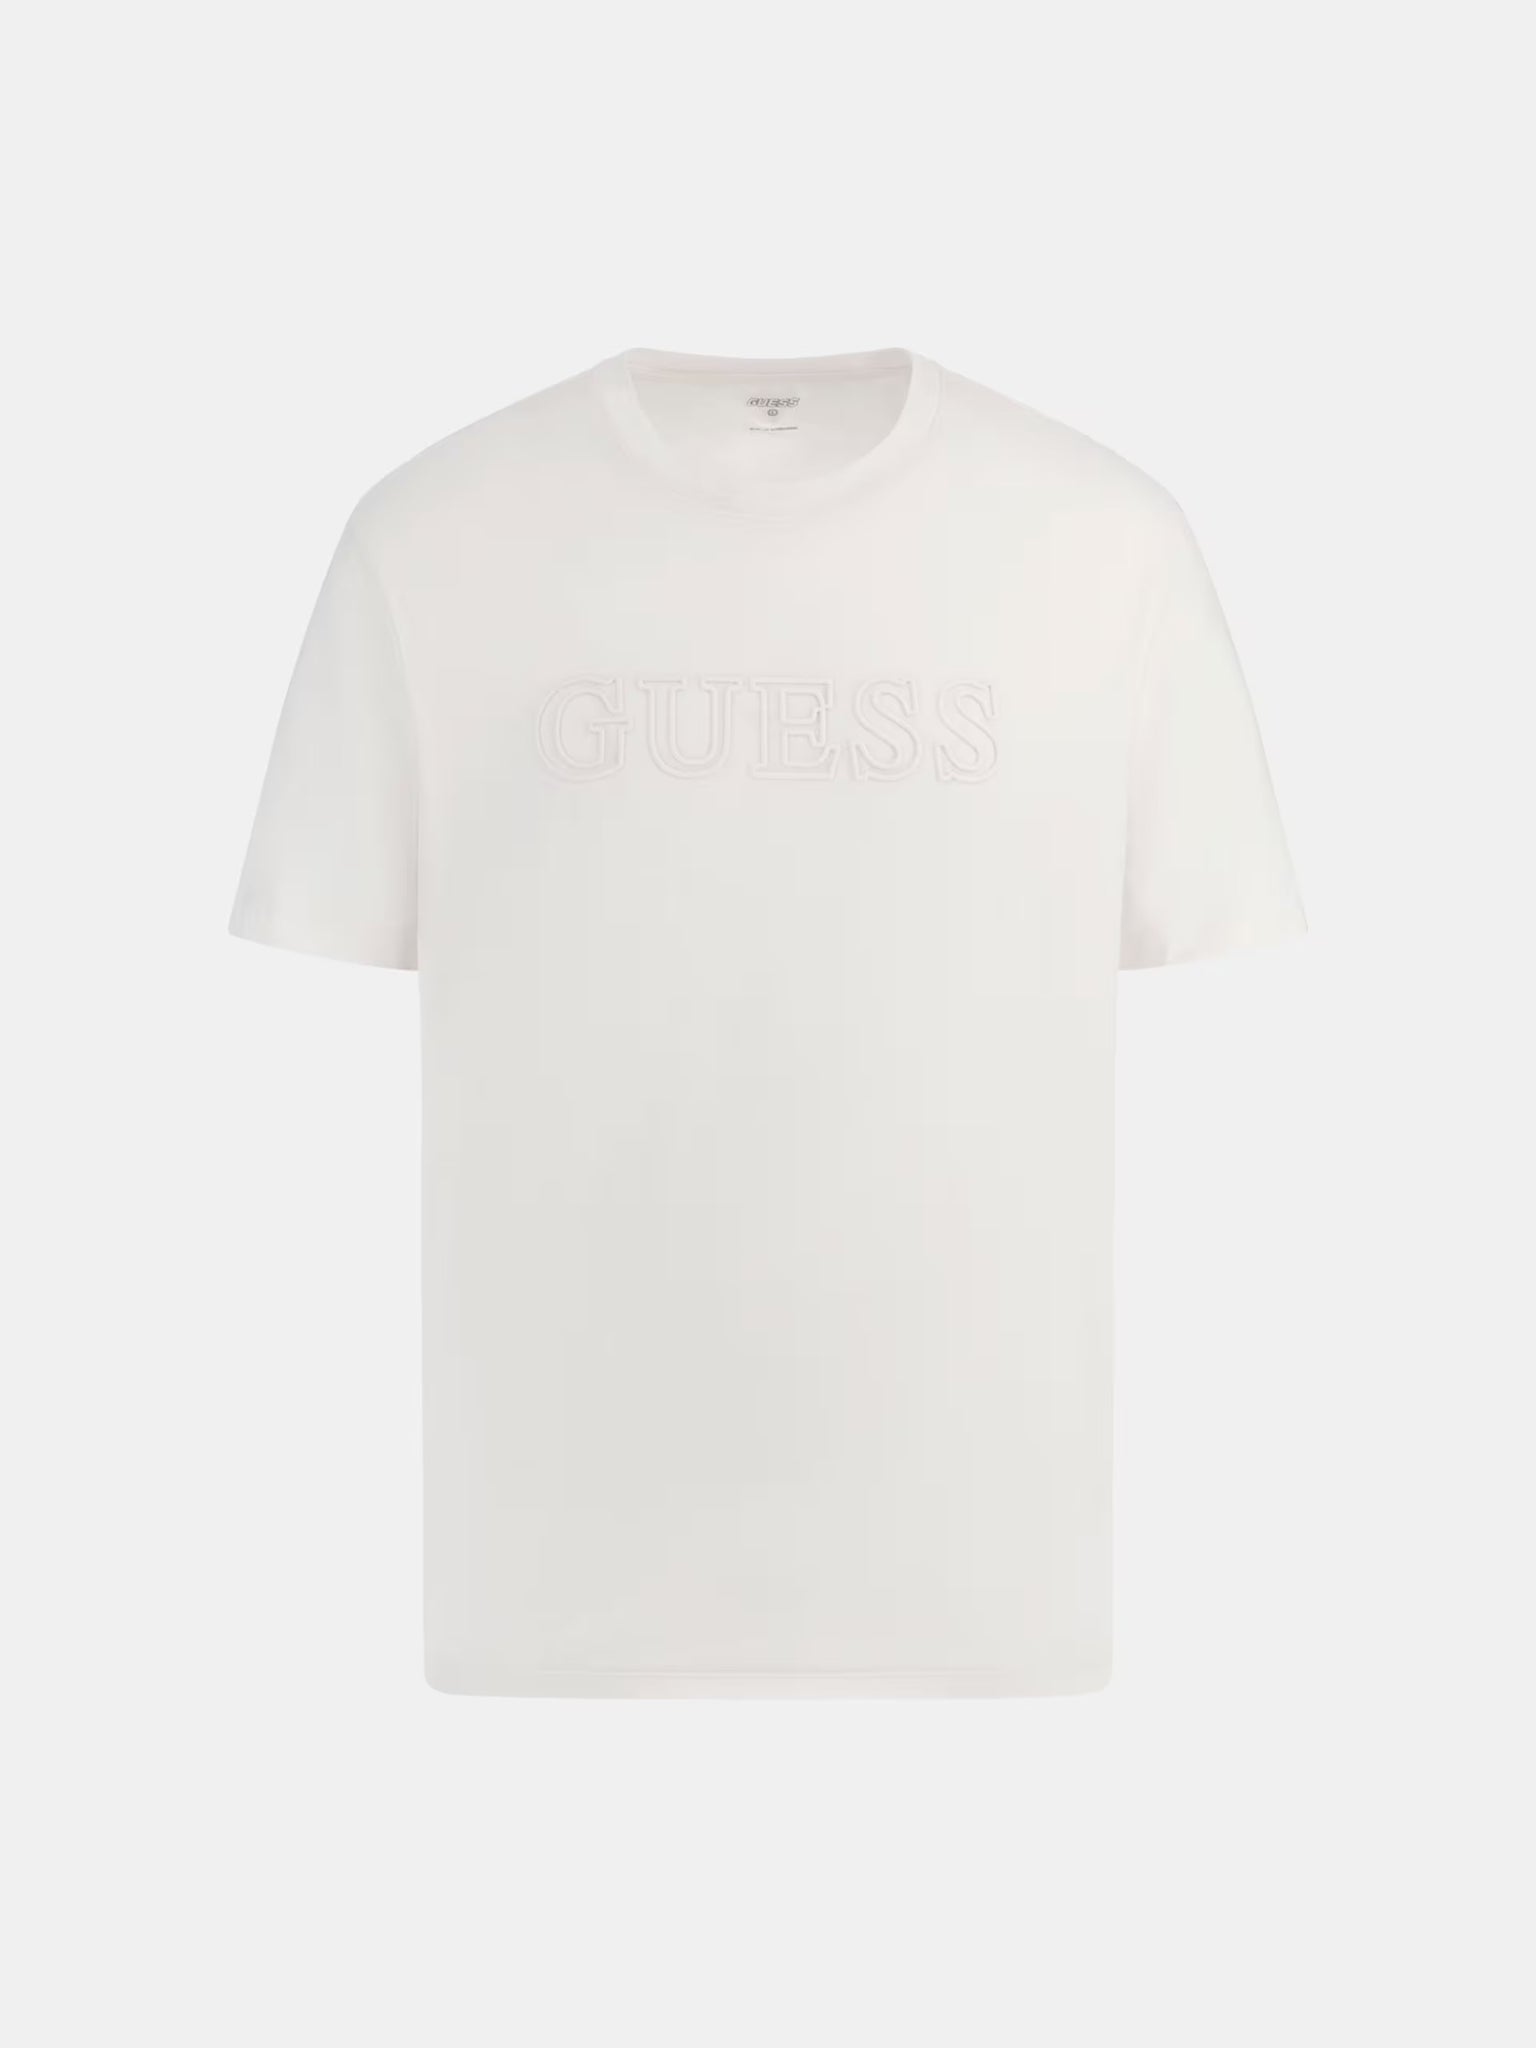 Guess Front Logo T-Shirt White